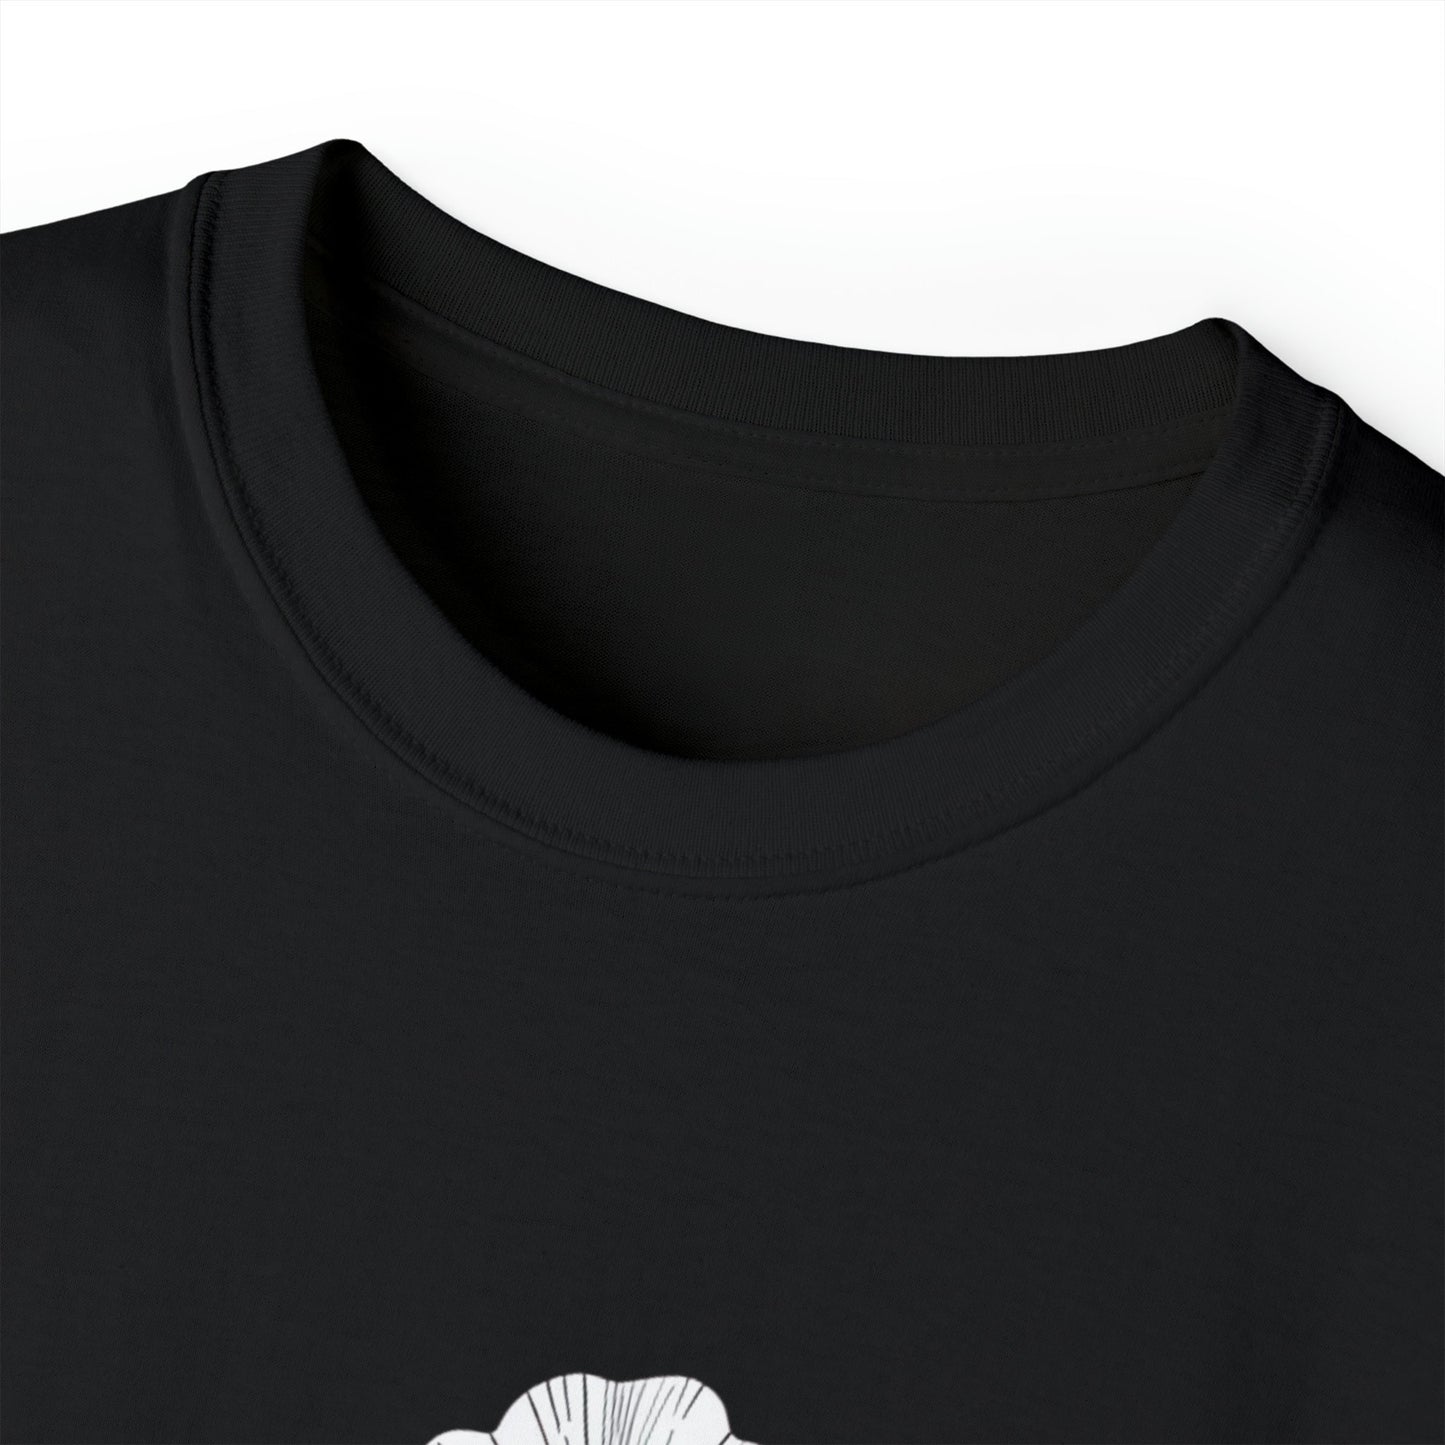 Sleek Capybara T-Shirt - Humorous Gift for Men, Women, and Kids with Stylish Line Art Design